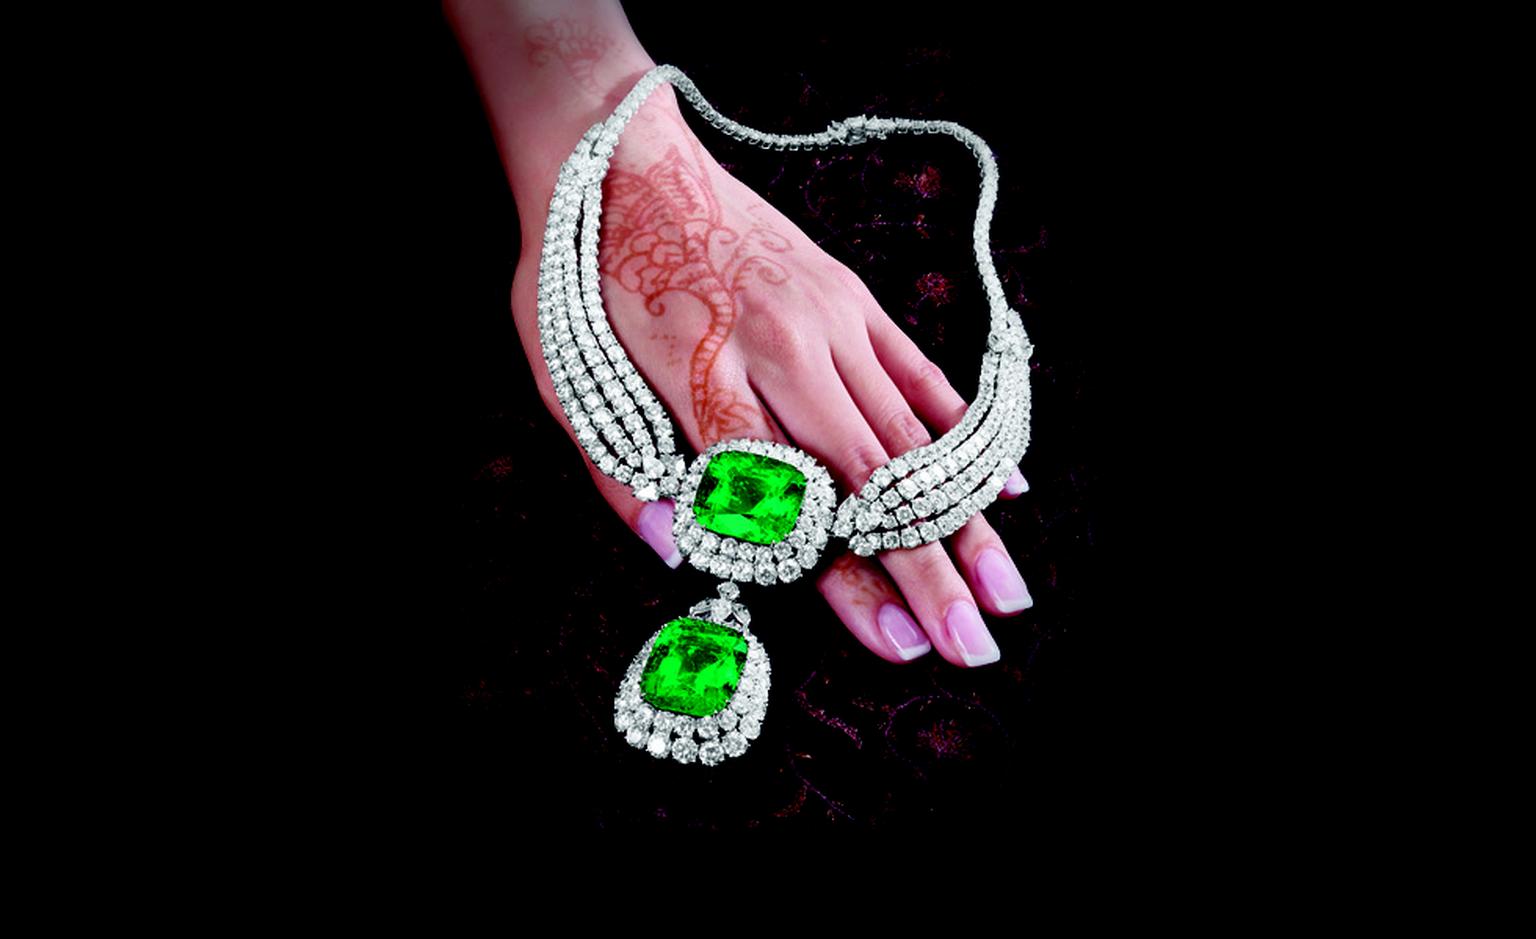 LOT 2656. Impressive emerald and diamond pendant necklace, Cartier. EST 8,000,000 - 10,000,000 HKD. LOT SOLD 8,420,000 HKD